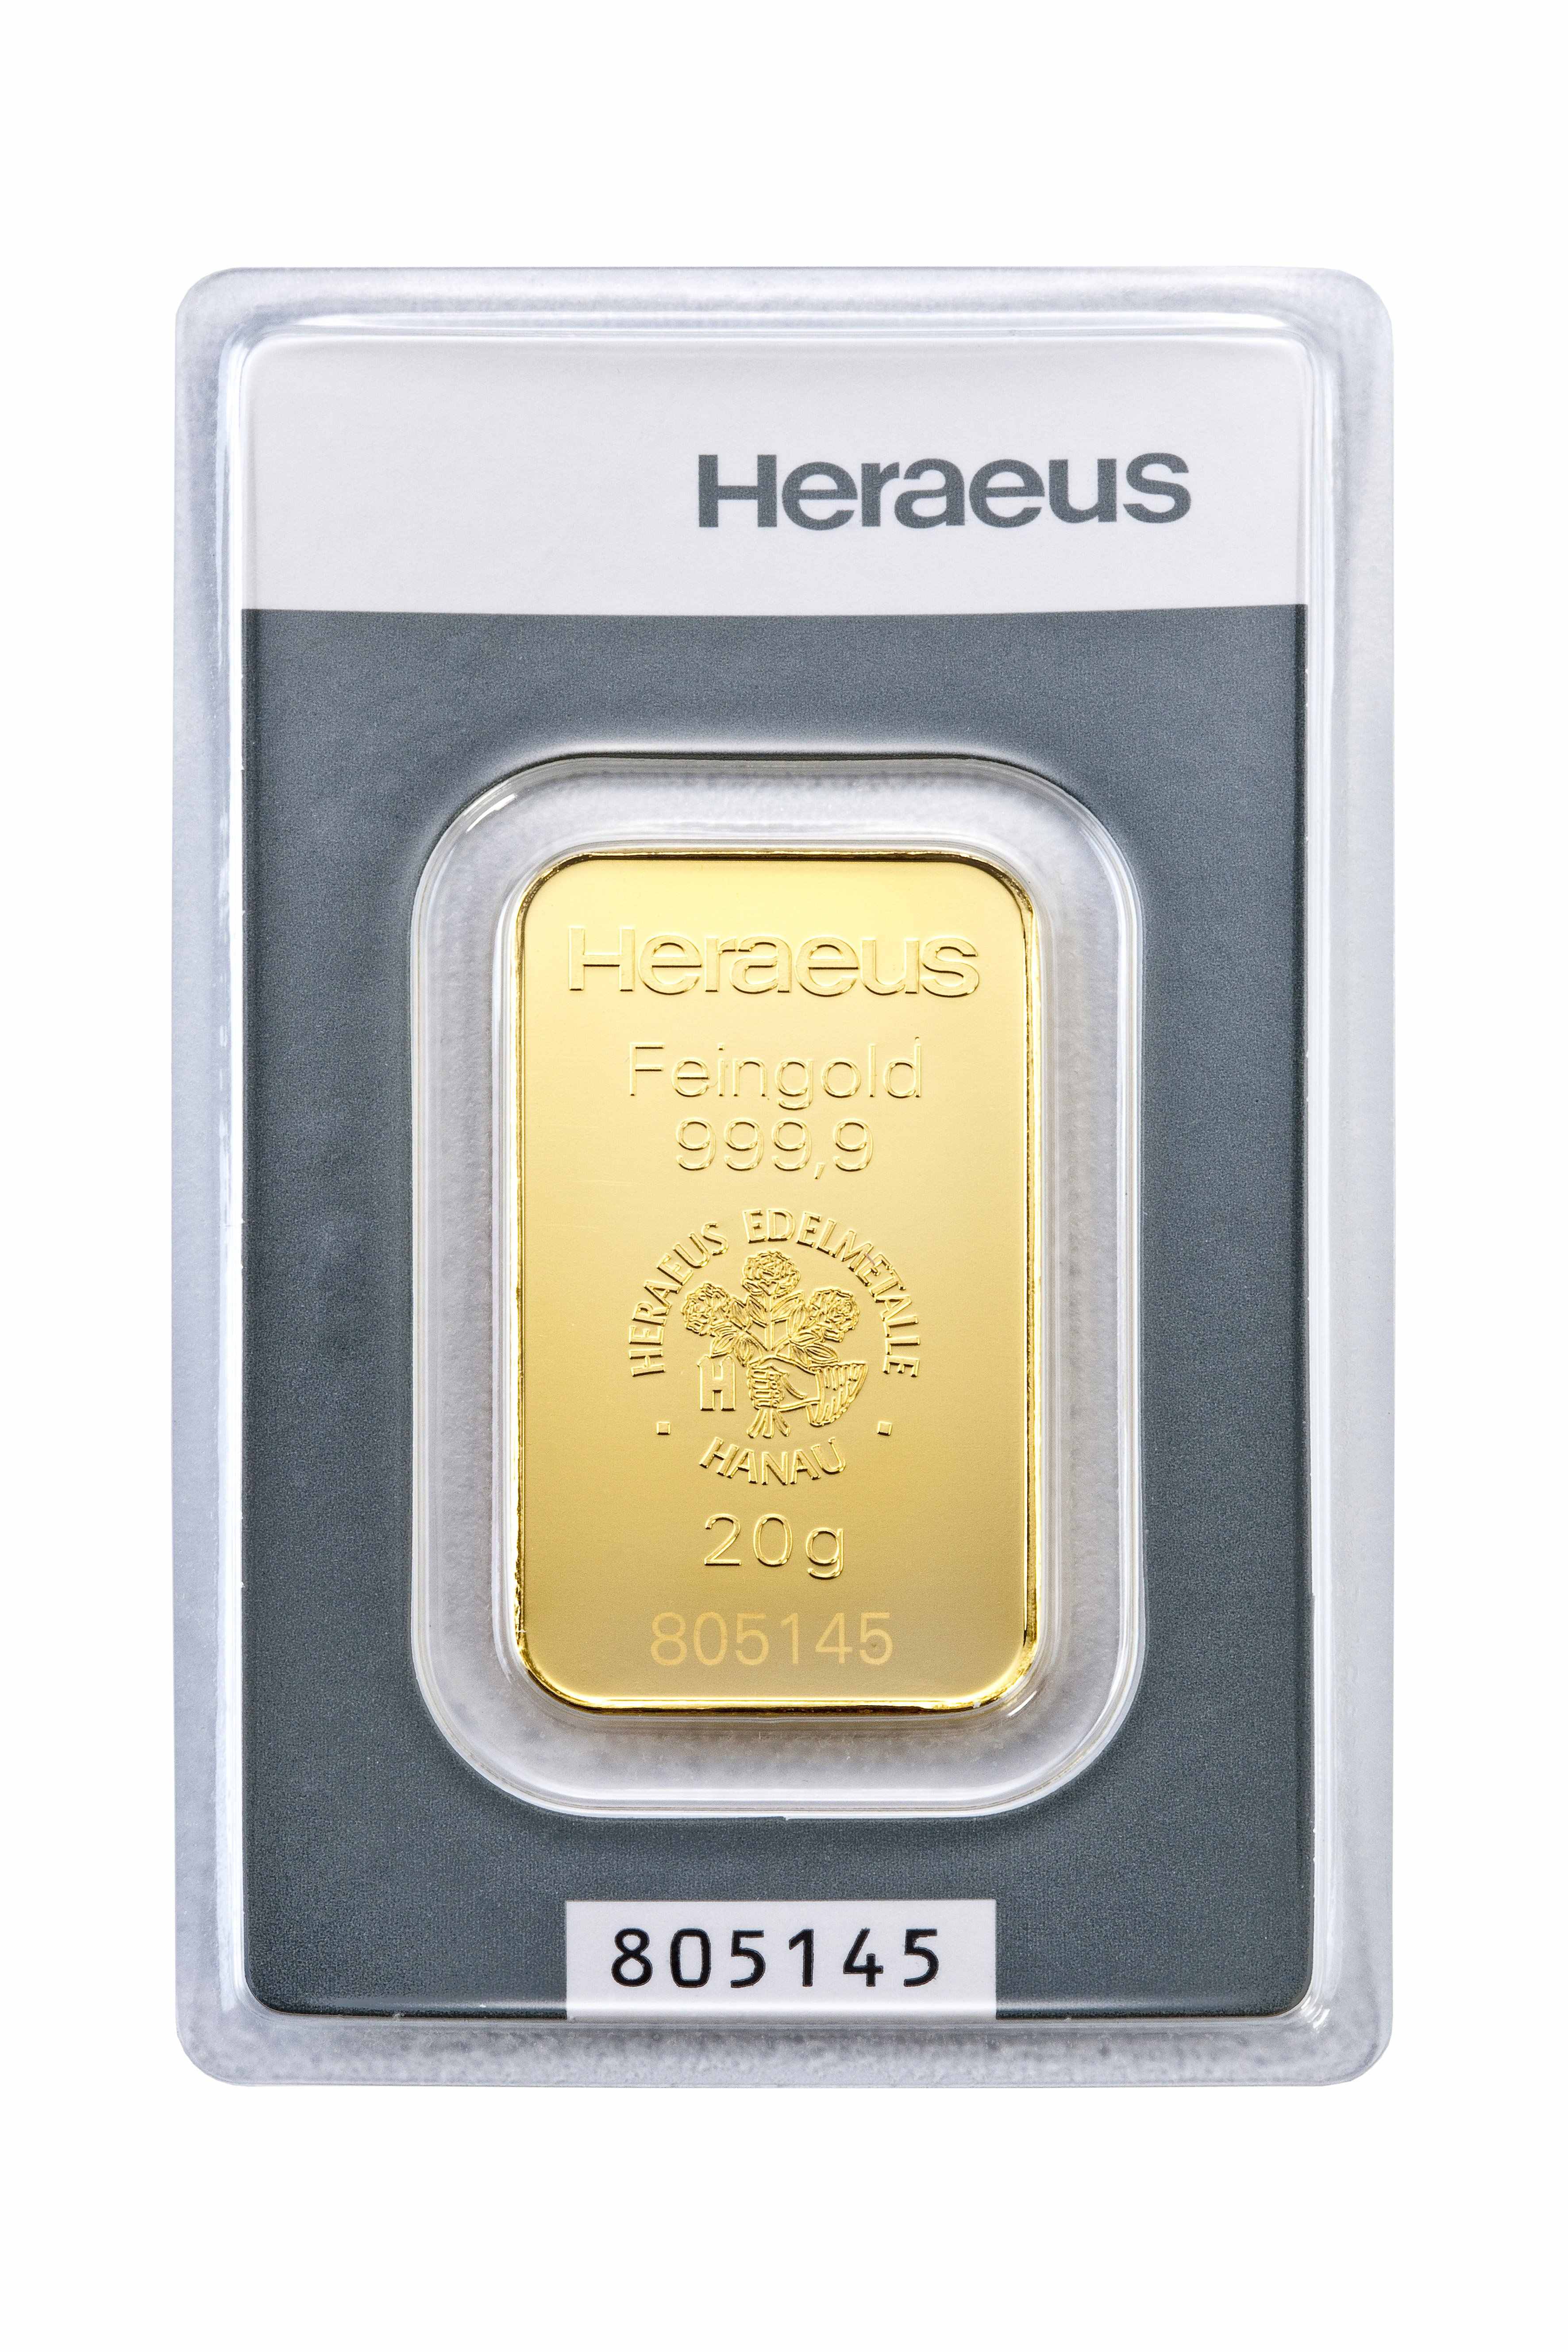 Heraeus Gold 20g